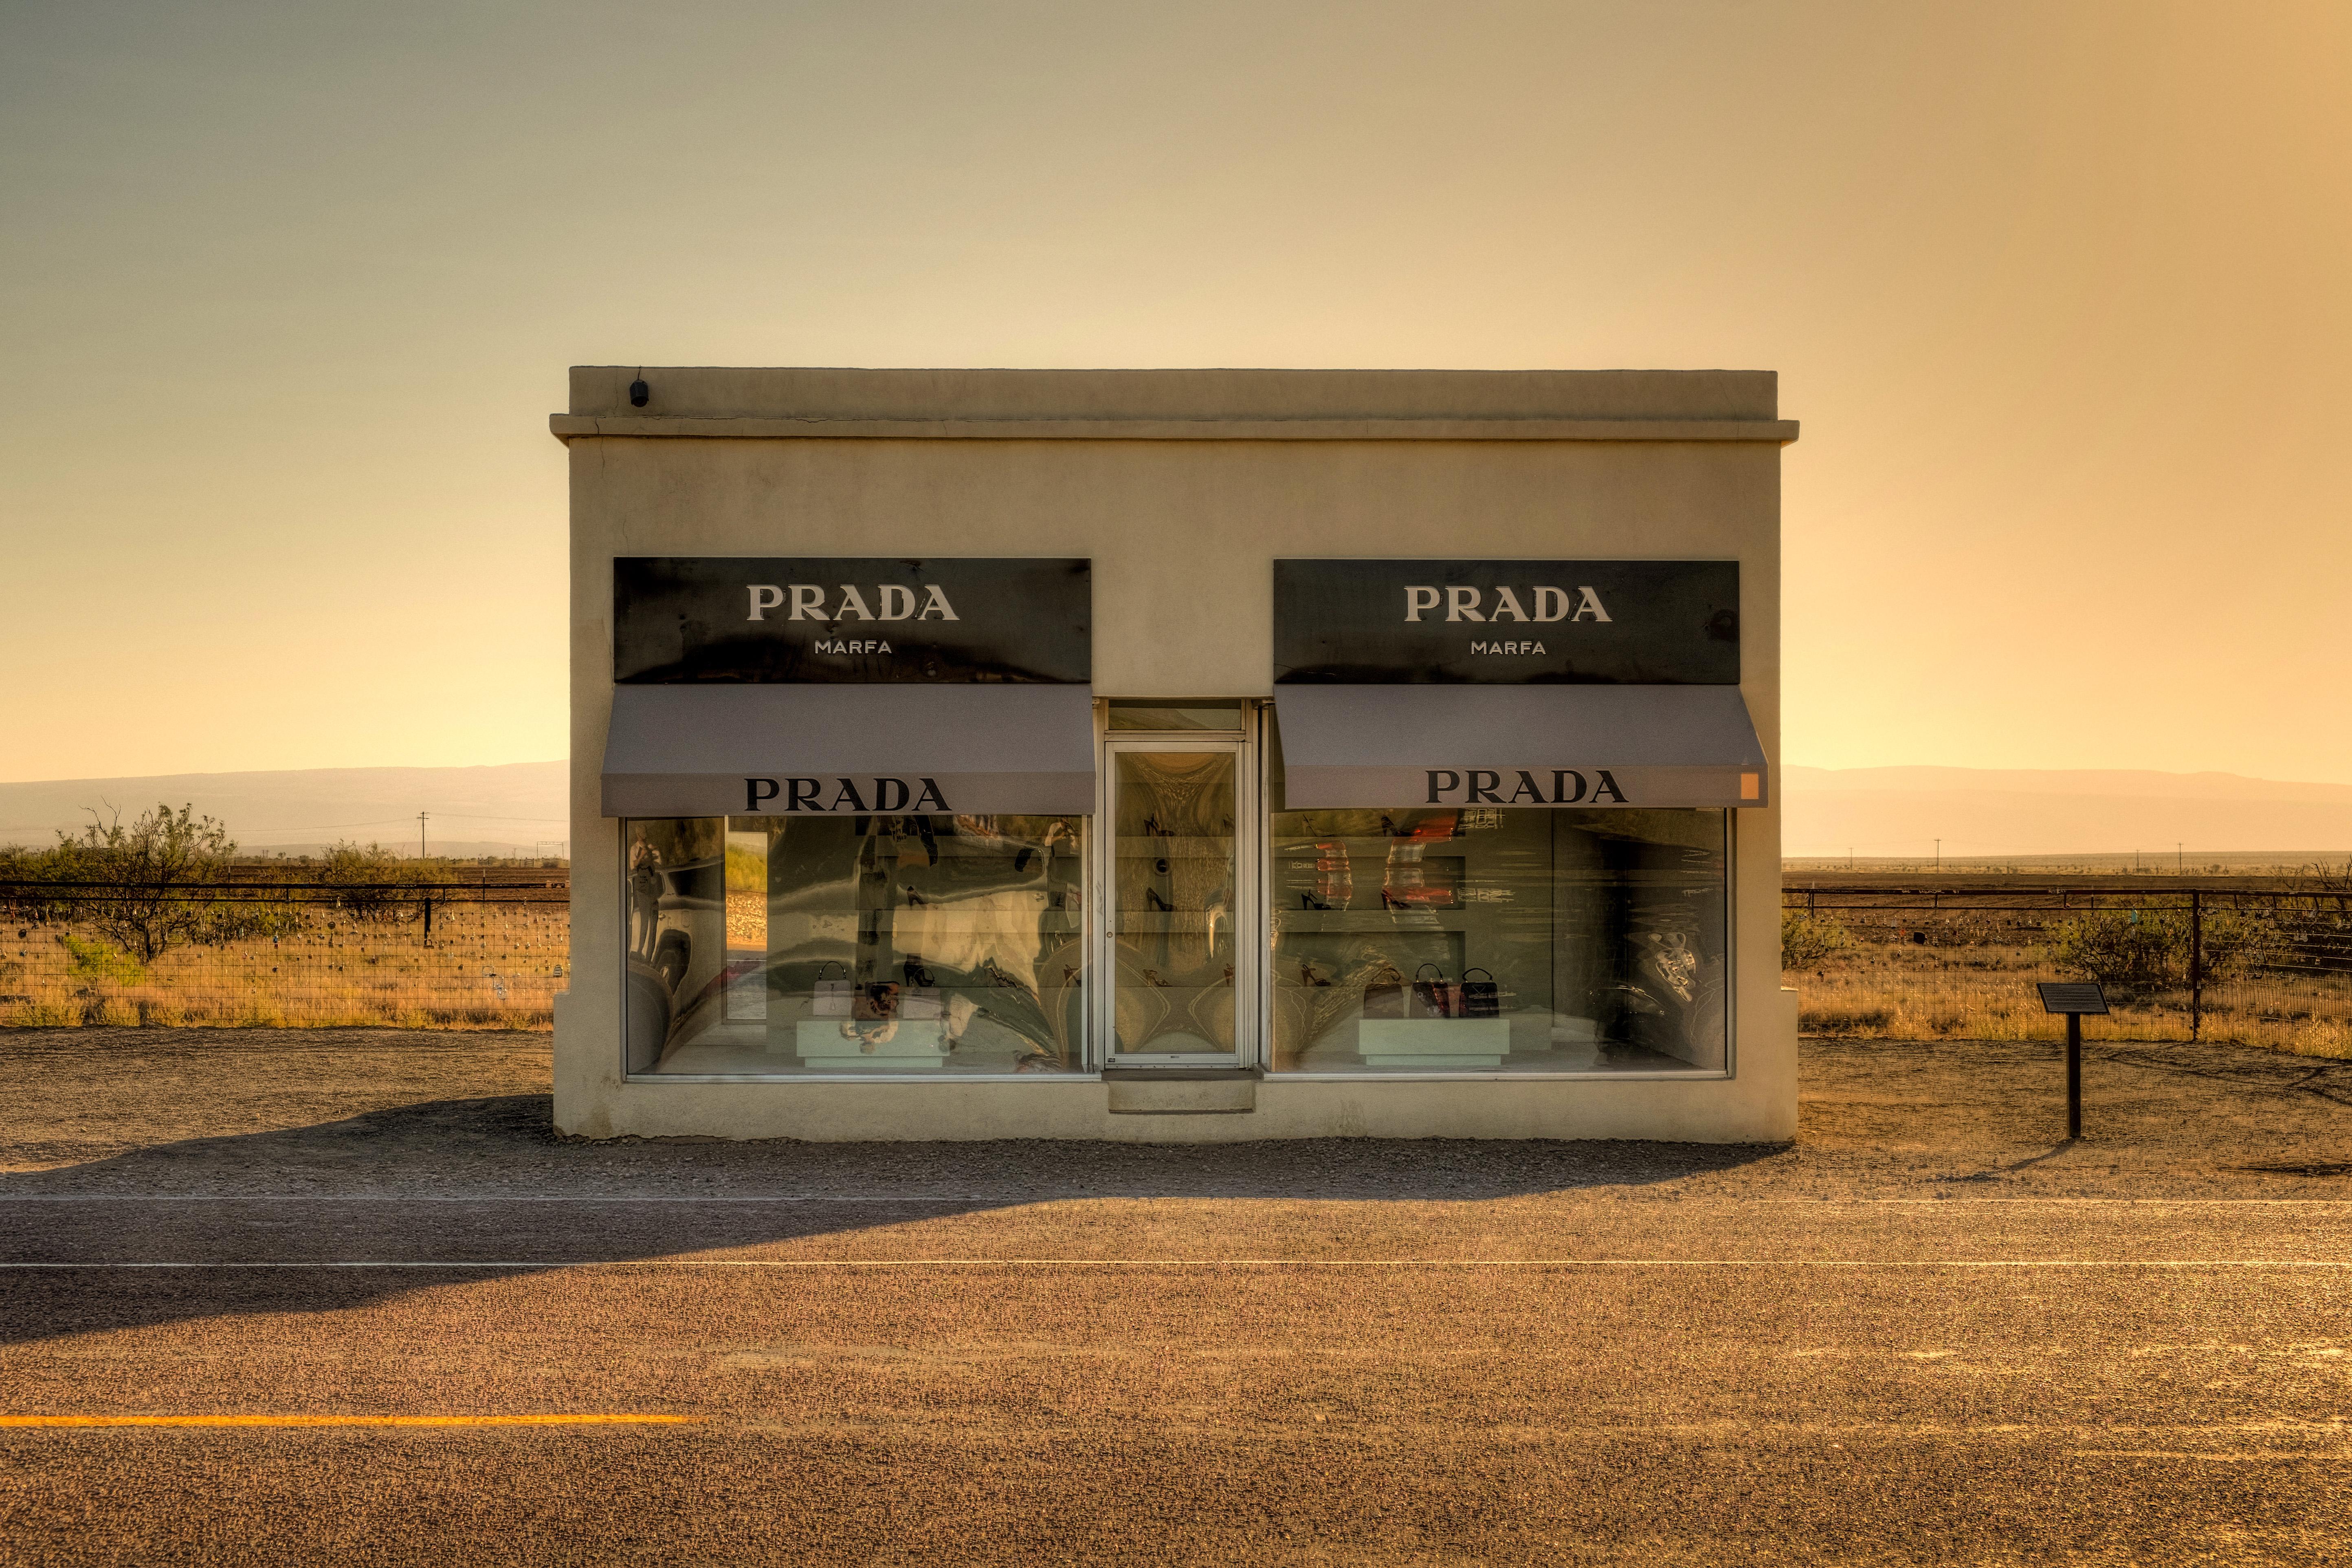 Nick Vedros Landscape Photograph - Prada Store in Marfa, TX